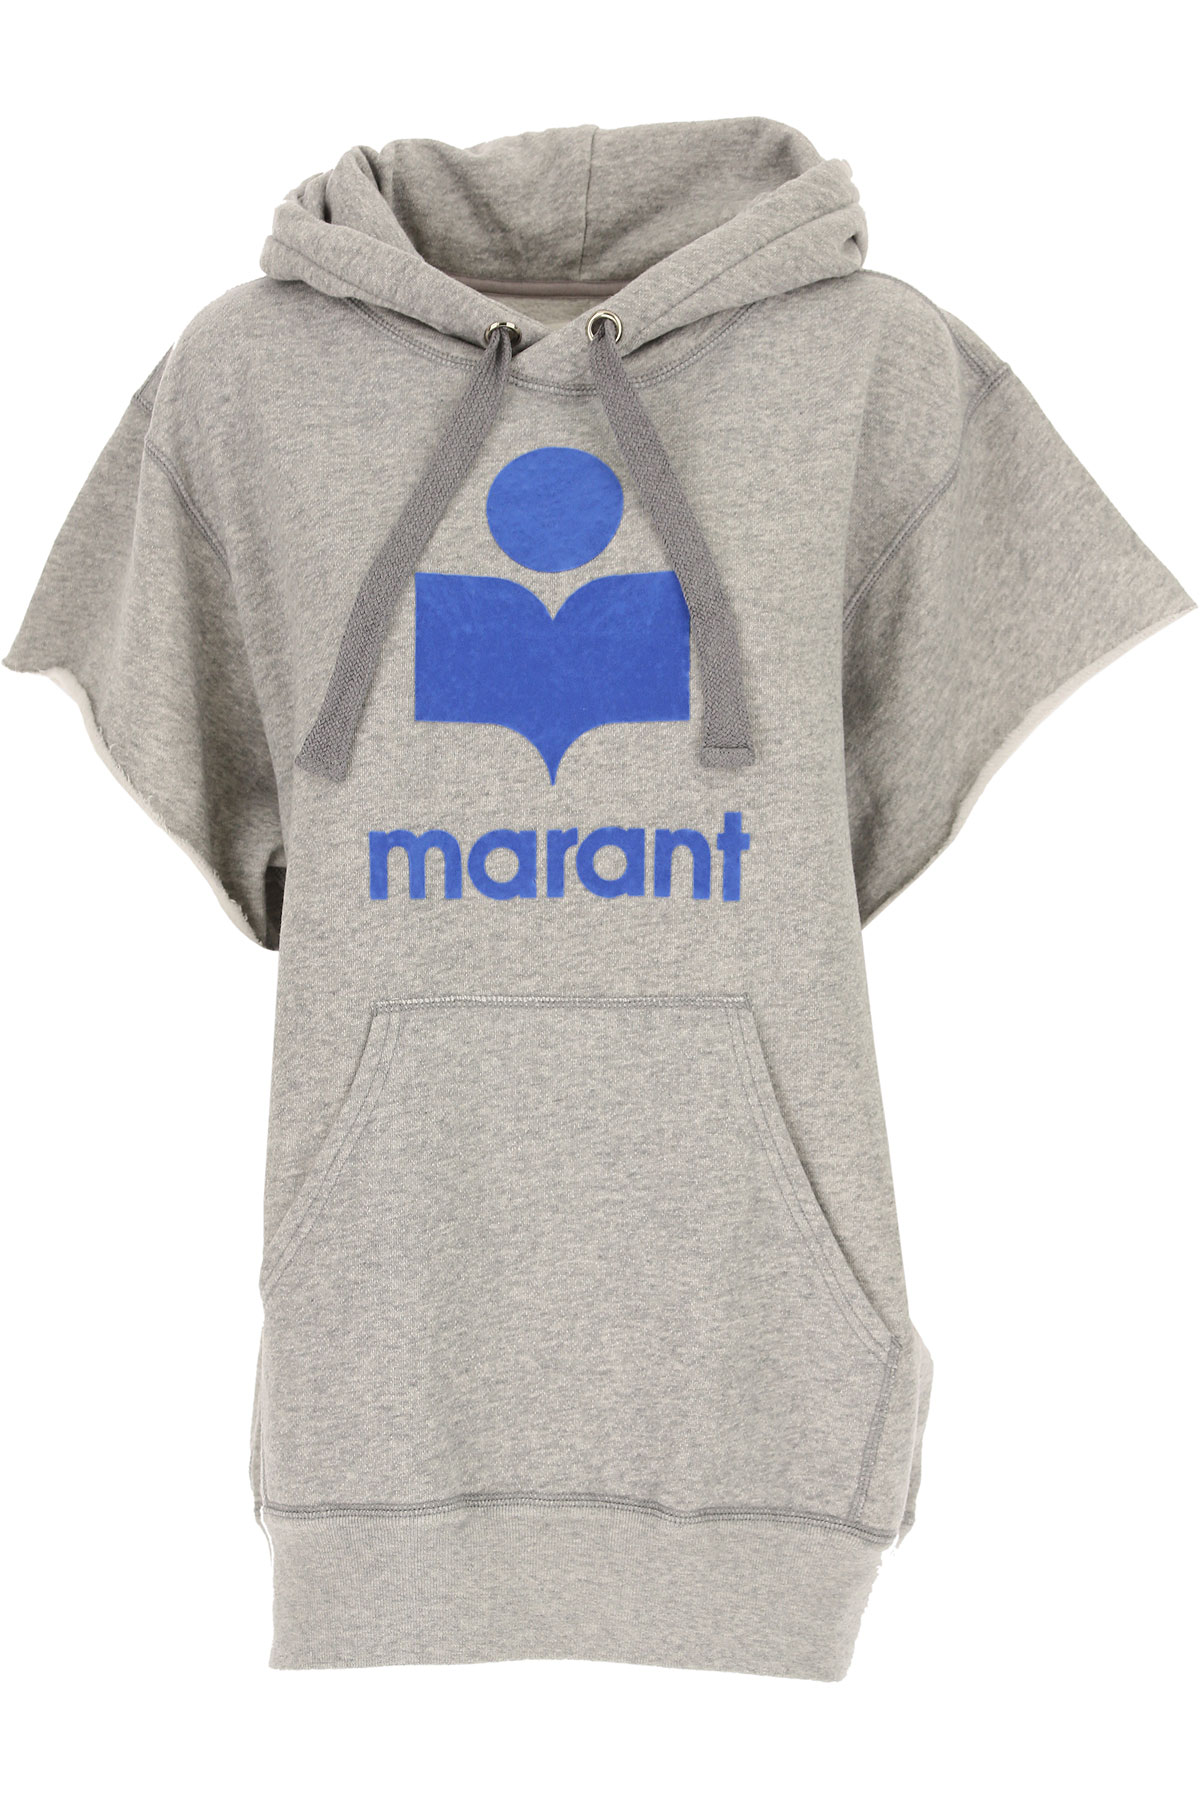 Isabel Marant Sweatshirt for Women, Gris, Coton, 2017, 38 40